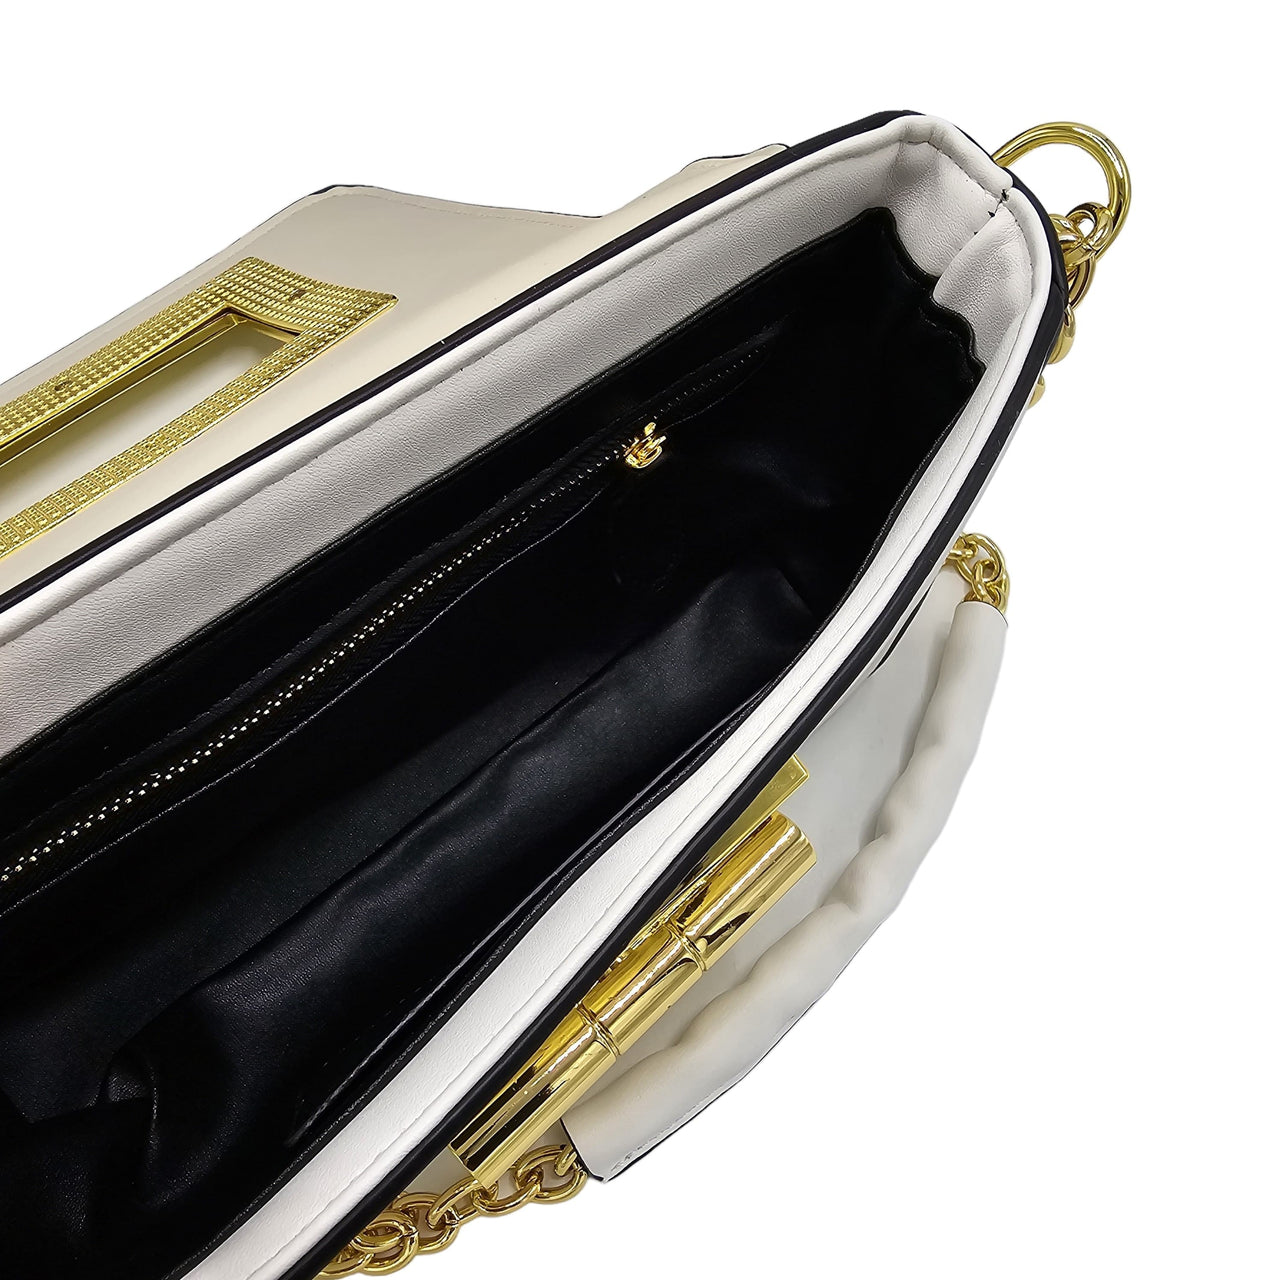 The Bag Couture Handbags, Wallets & Cases TOM FORD Natalia Leather Medium Shoulder Bag White